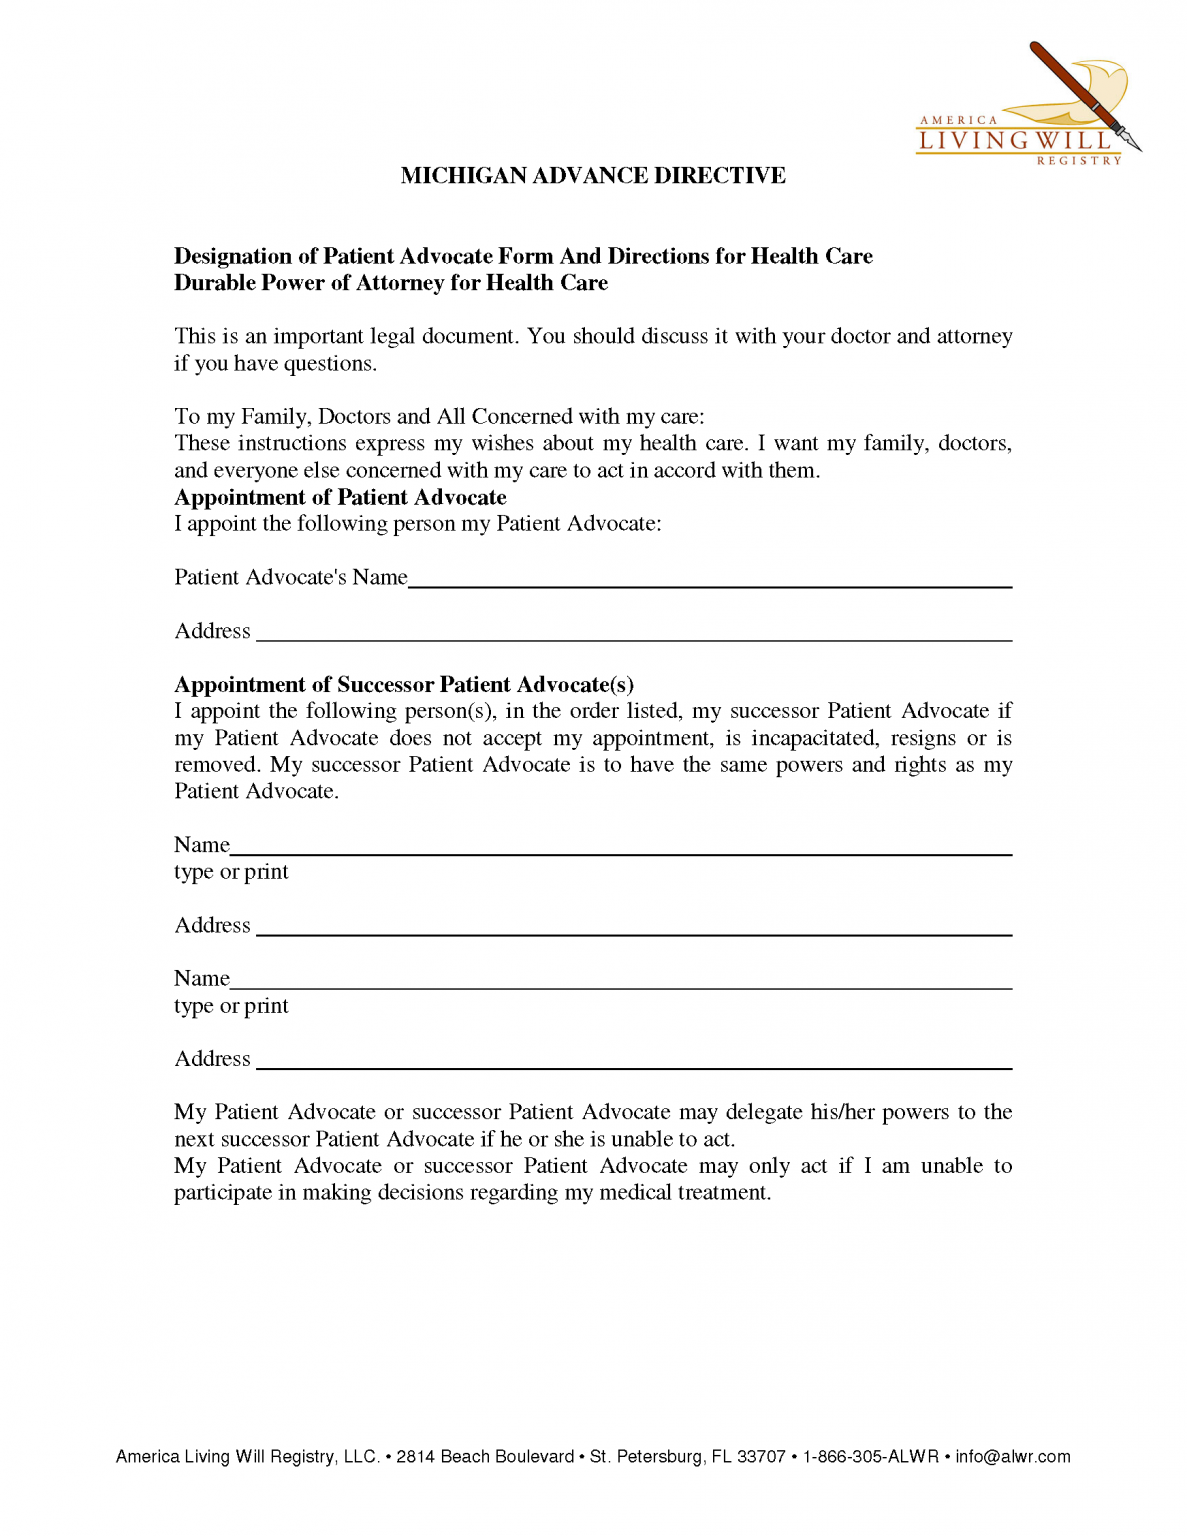 free-michigan-advance-directive-form-pdf-eforms